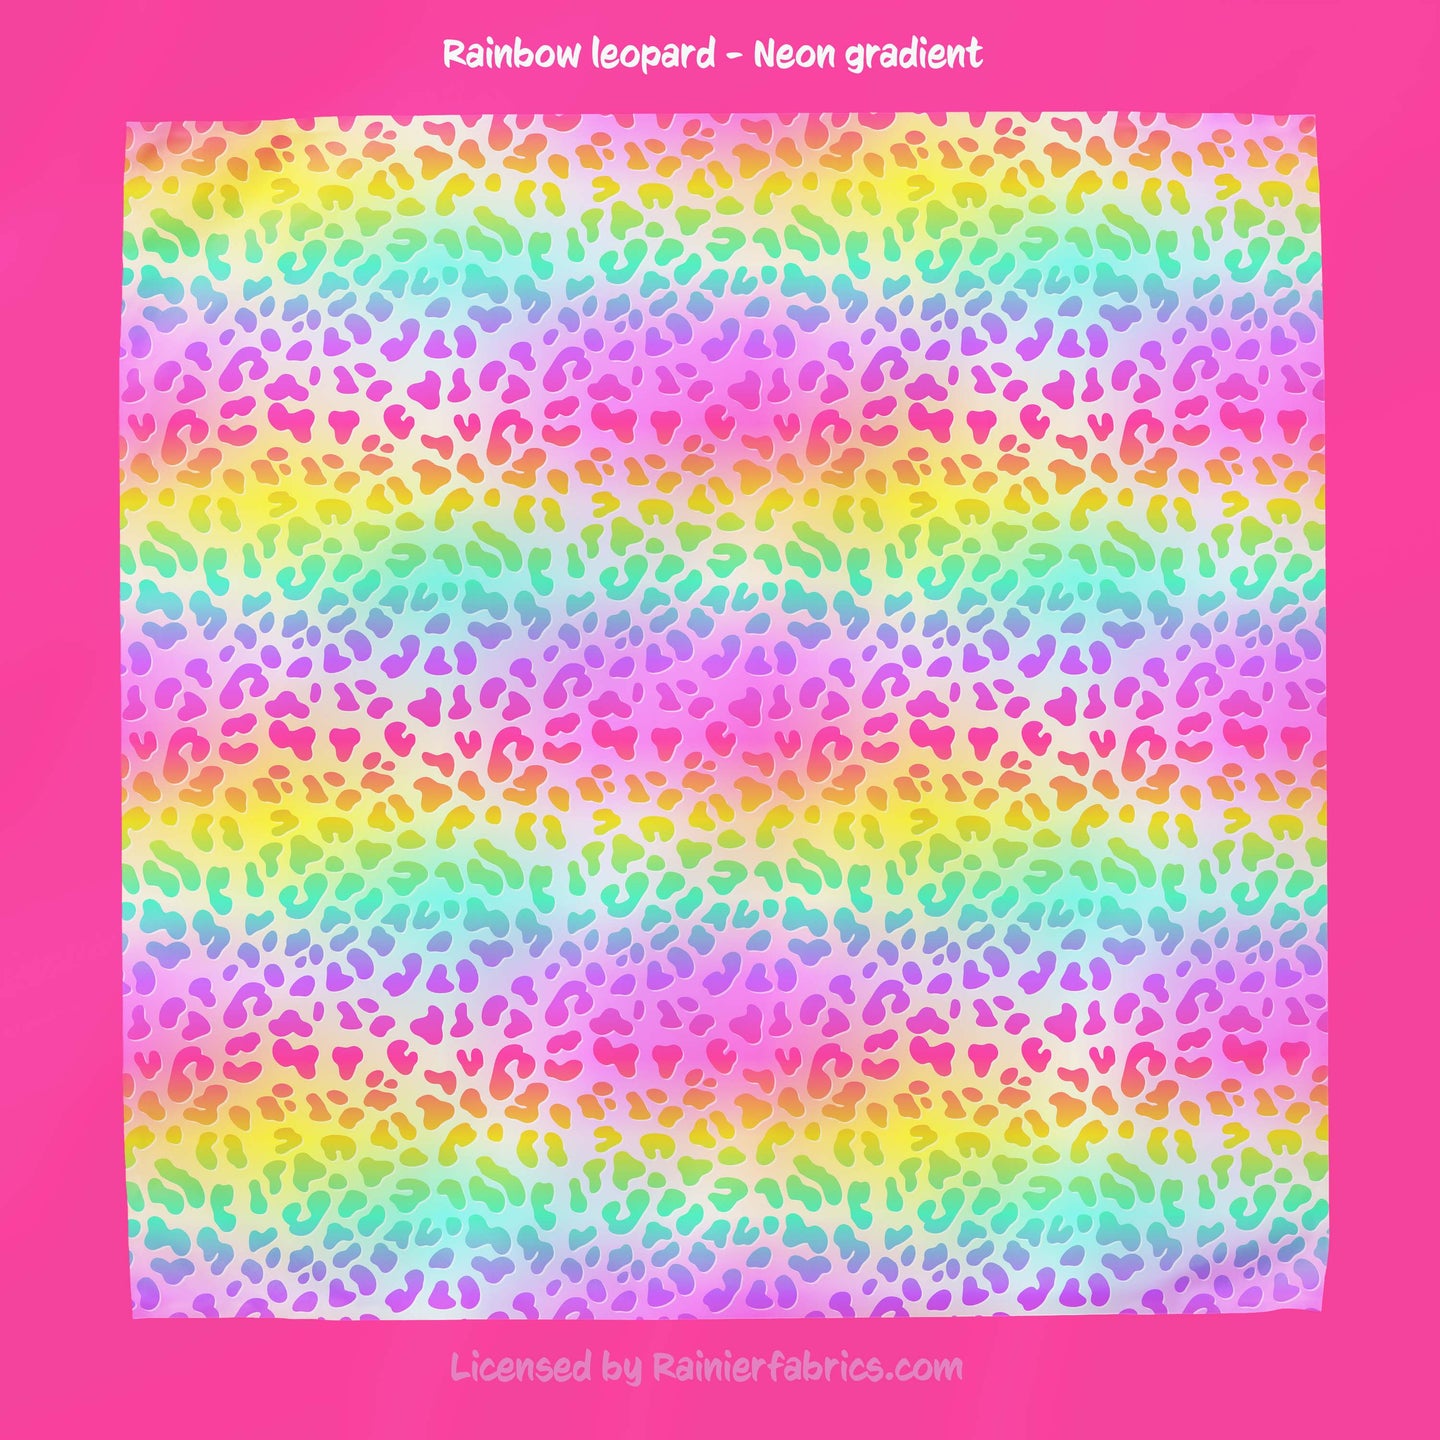 Rainbow leopard - Neon gradient- 2-5 day turnaround - Order by 1/2 yard; Description of bases below